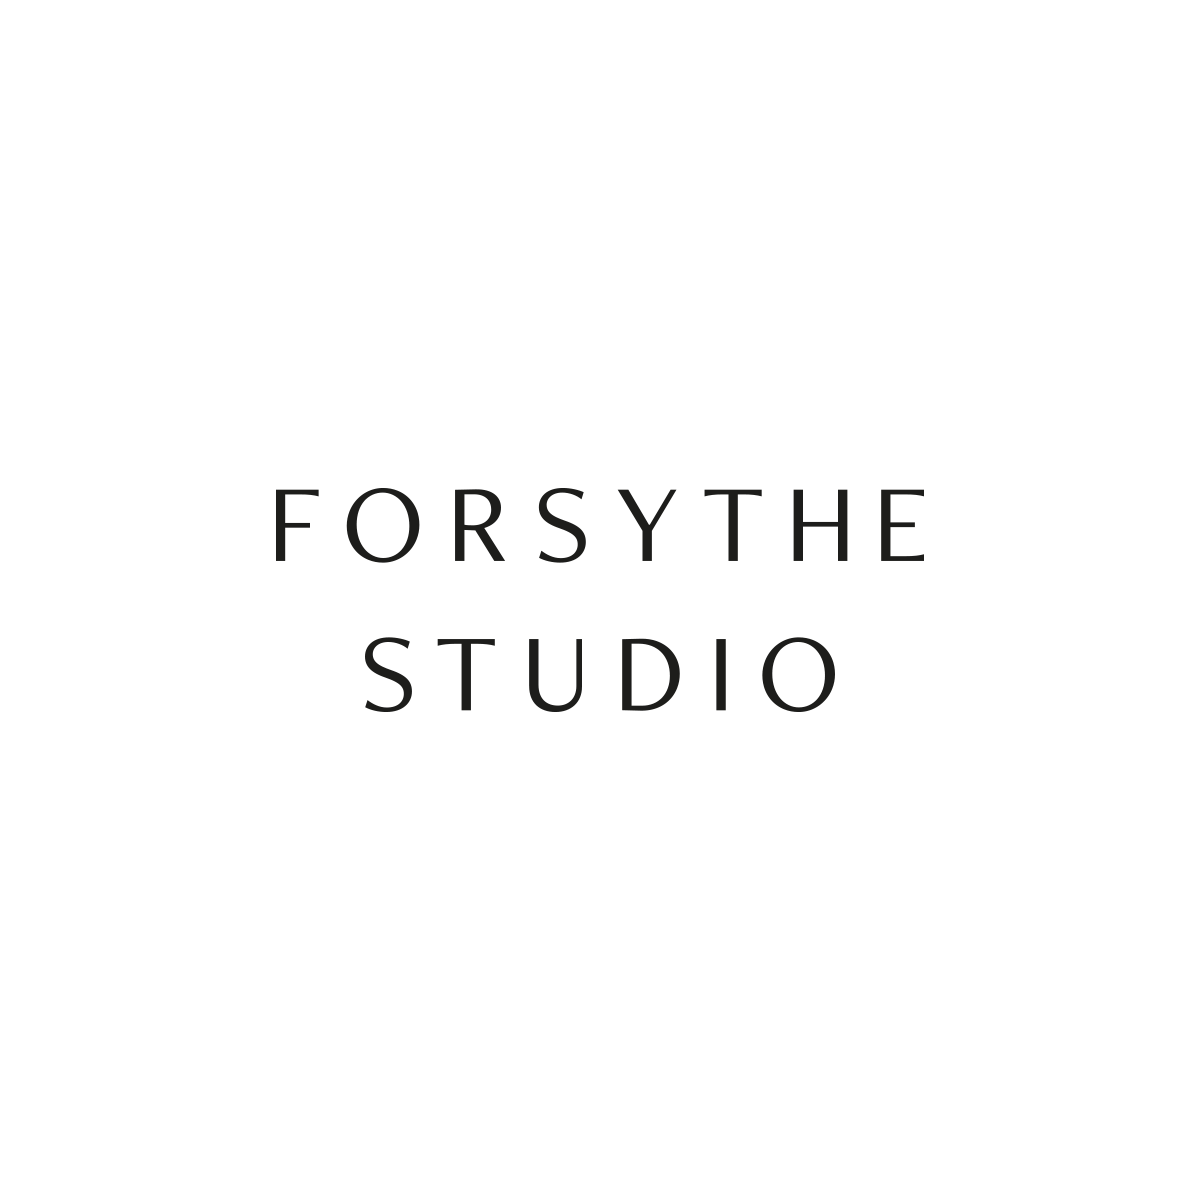 Forsythe Studio